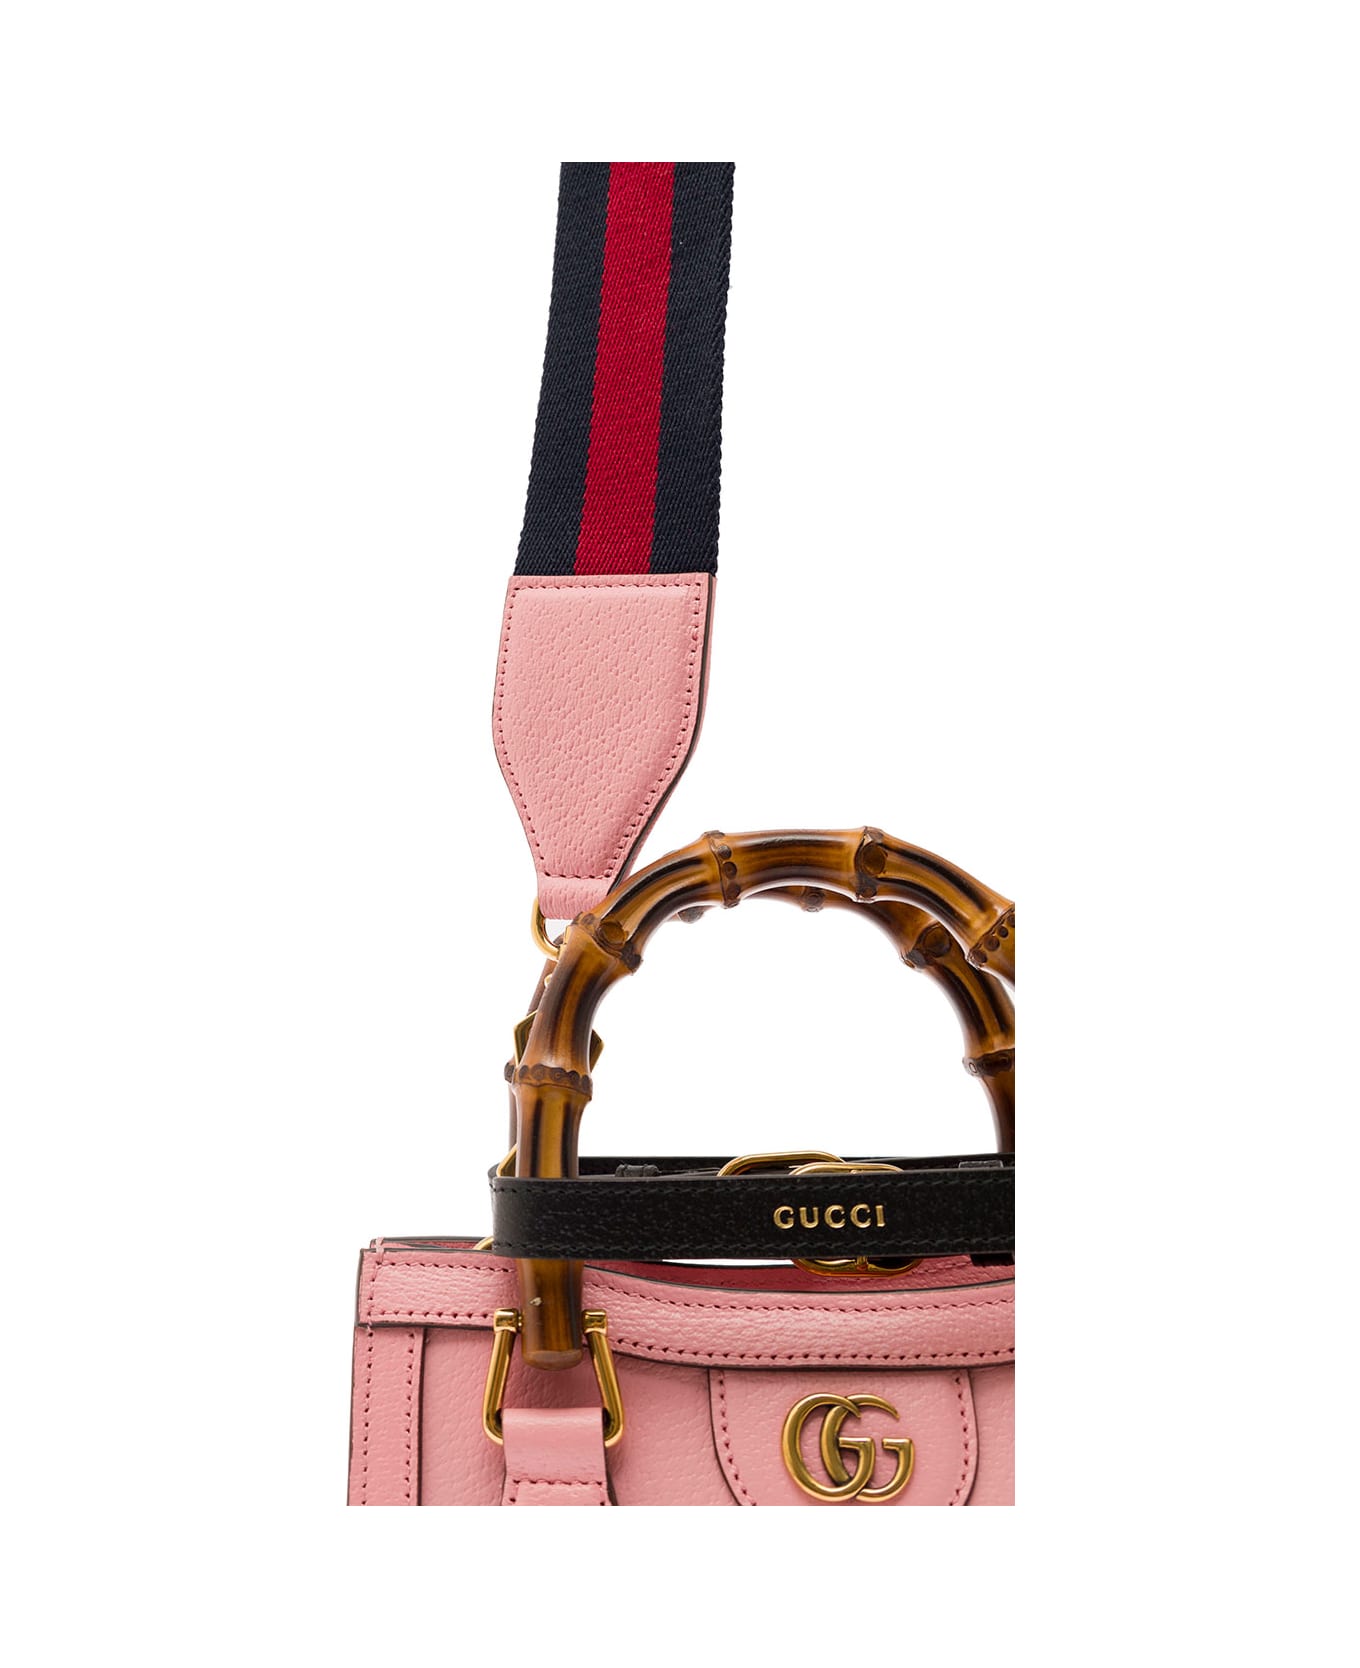 Gucci 'diana' Mini Tote Bag - Pink